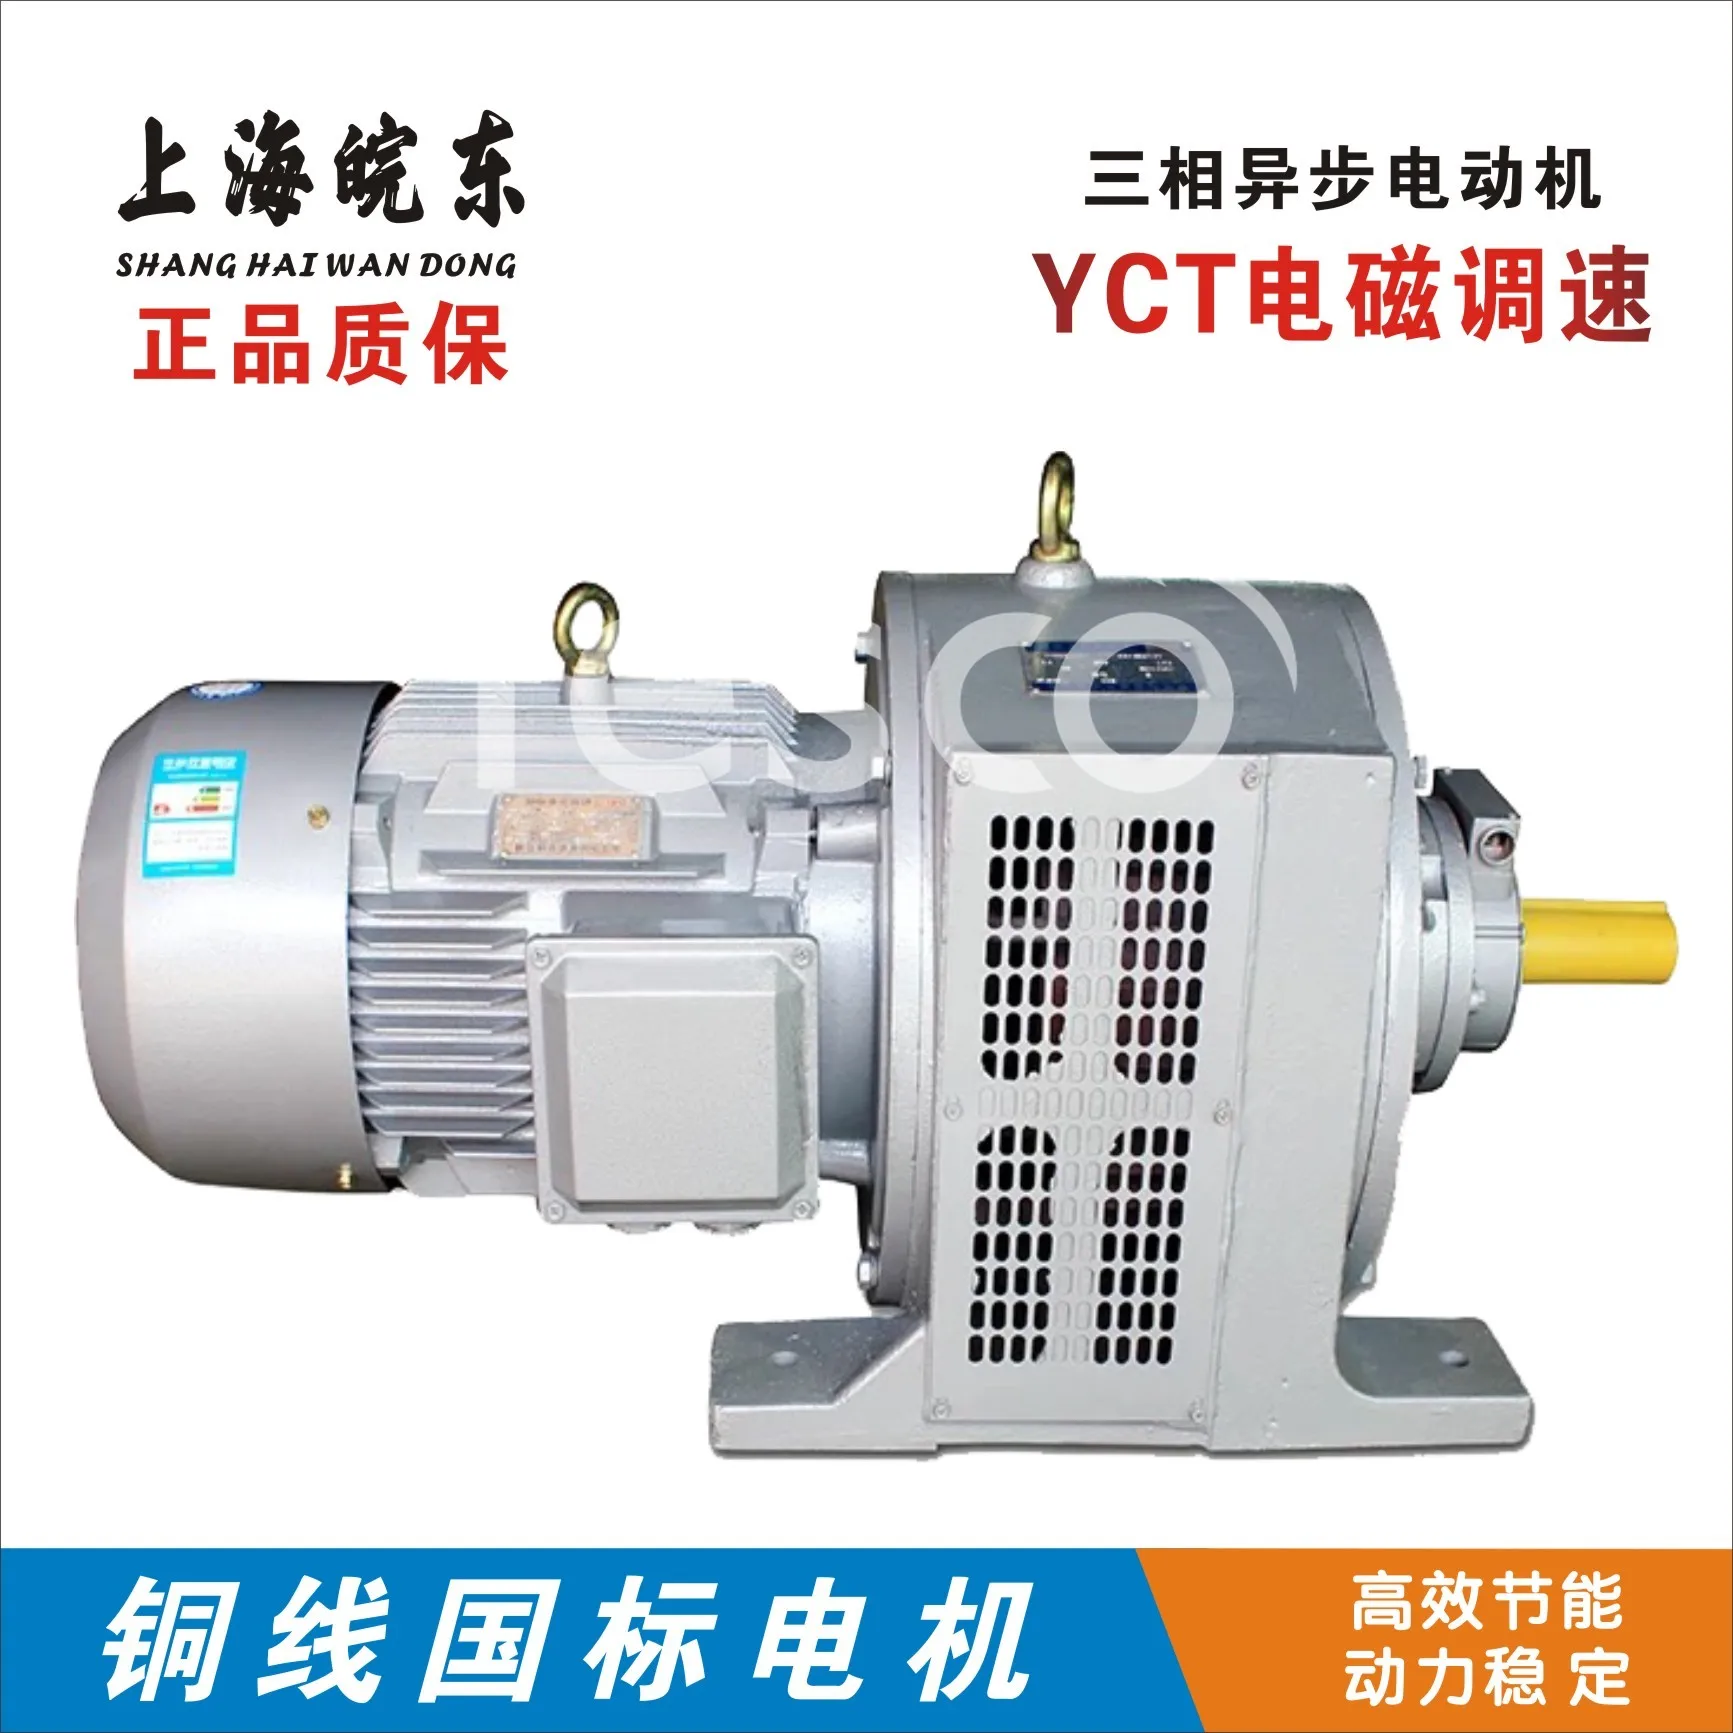 Nationale standard kobbertråd 0,75 KW tre-fase asynkron motor YCT112-4B kilowatt-slip 380V motor